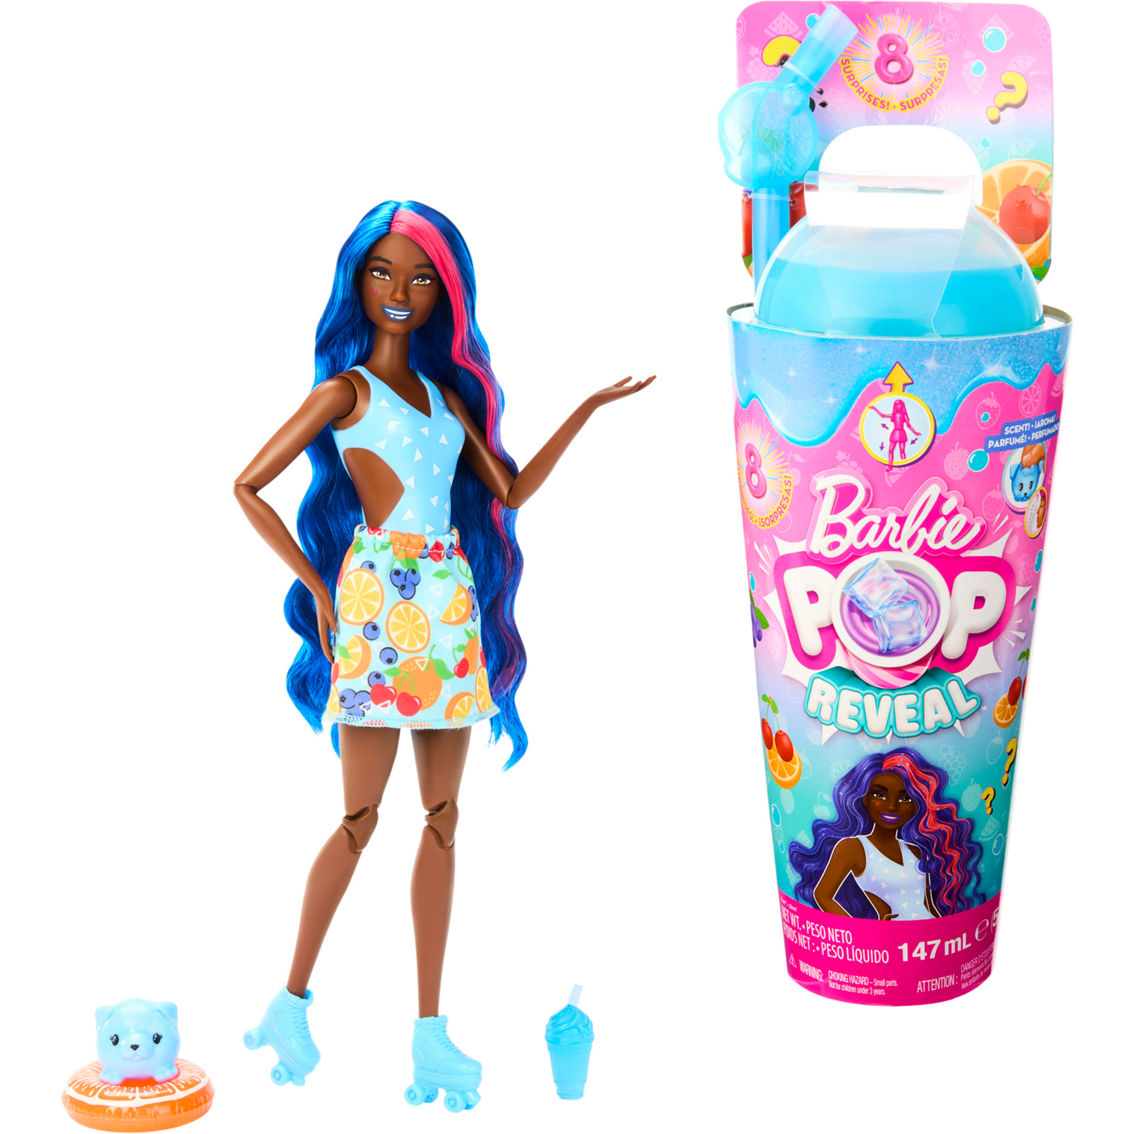 Mattel Barbie Pop Reveal Fruit Series Doll - Image 2 of 10